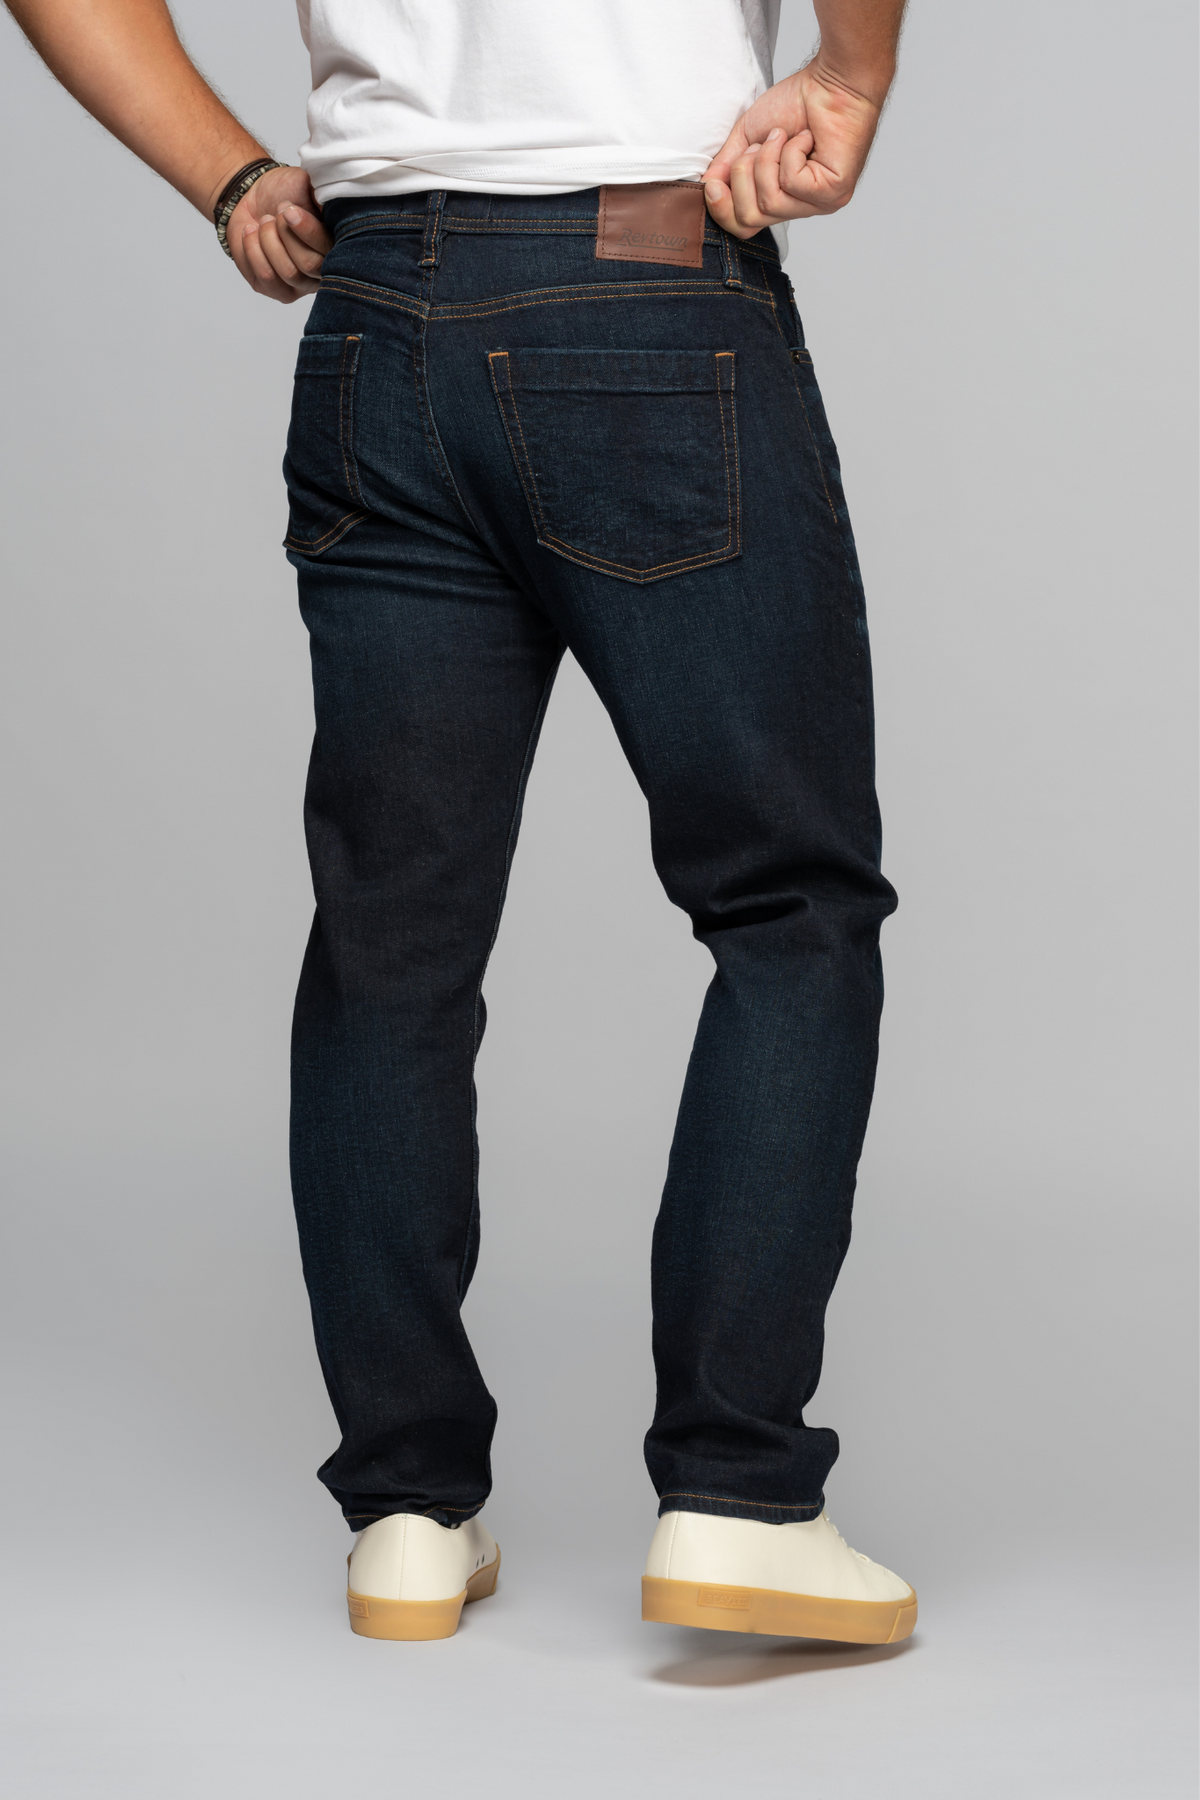 Men's Slim Jeans - Dark Wash | Revtown